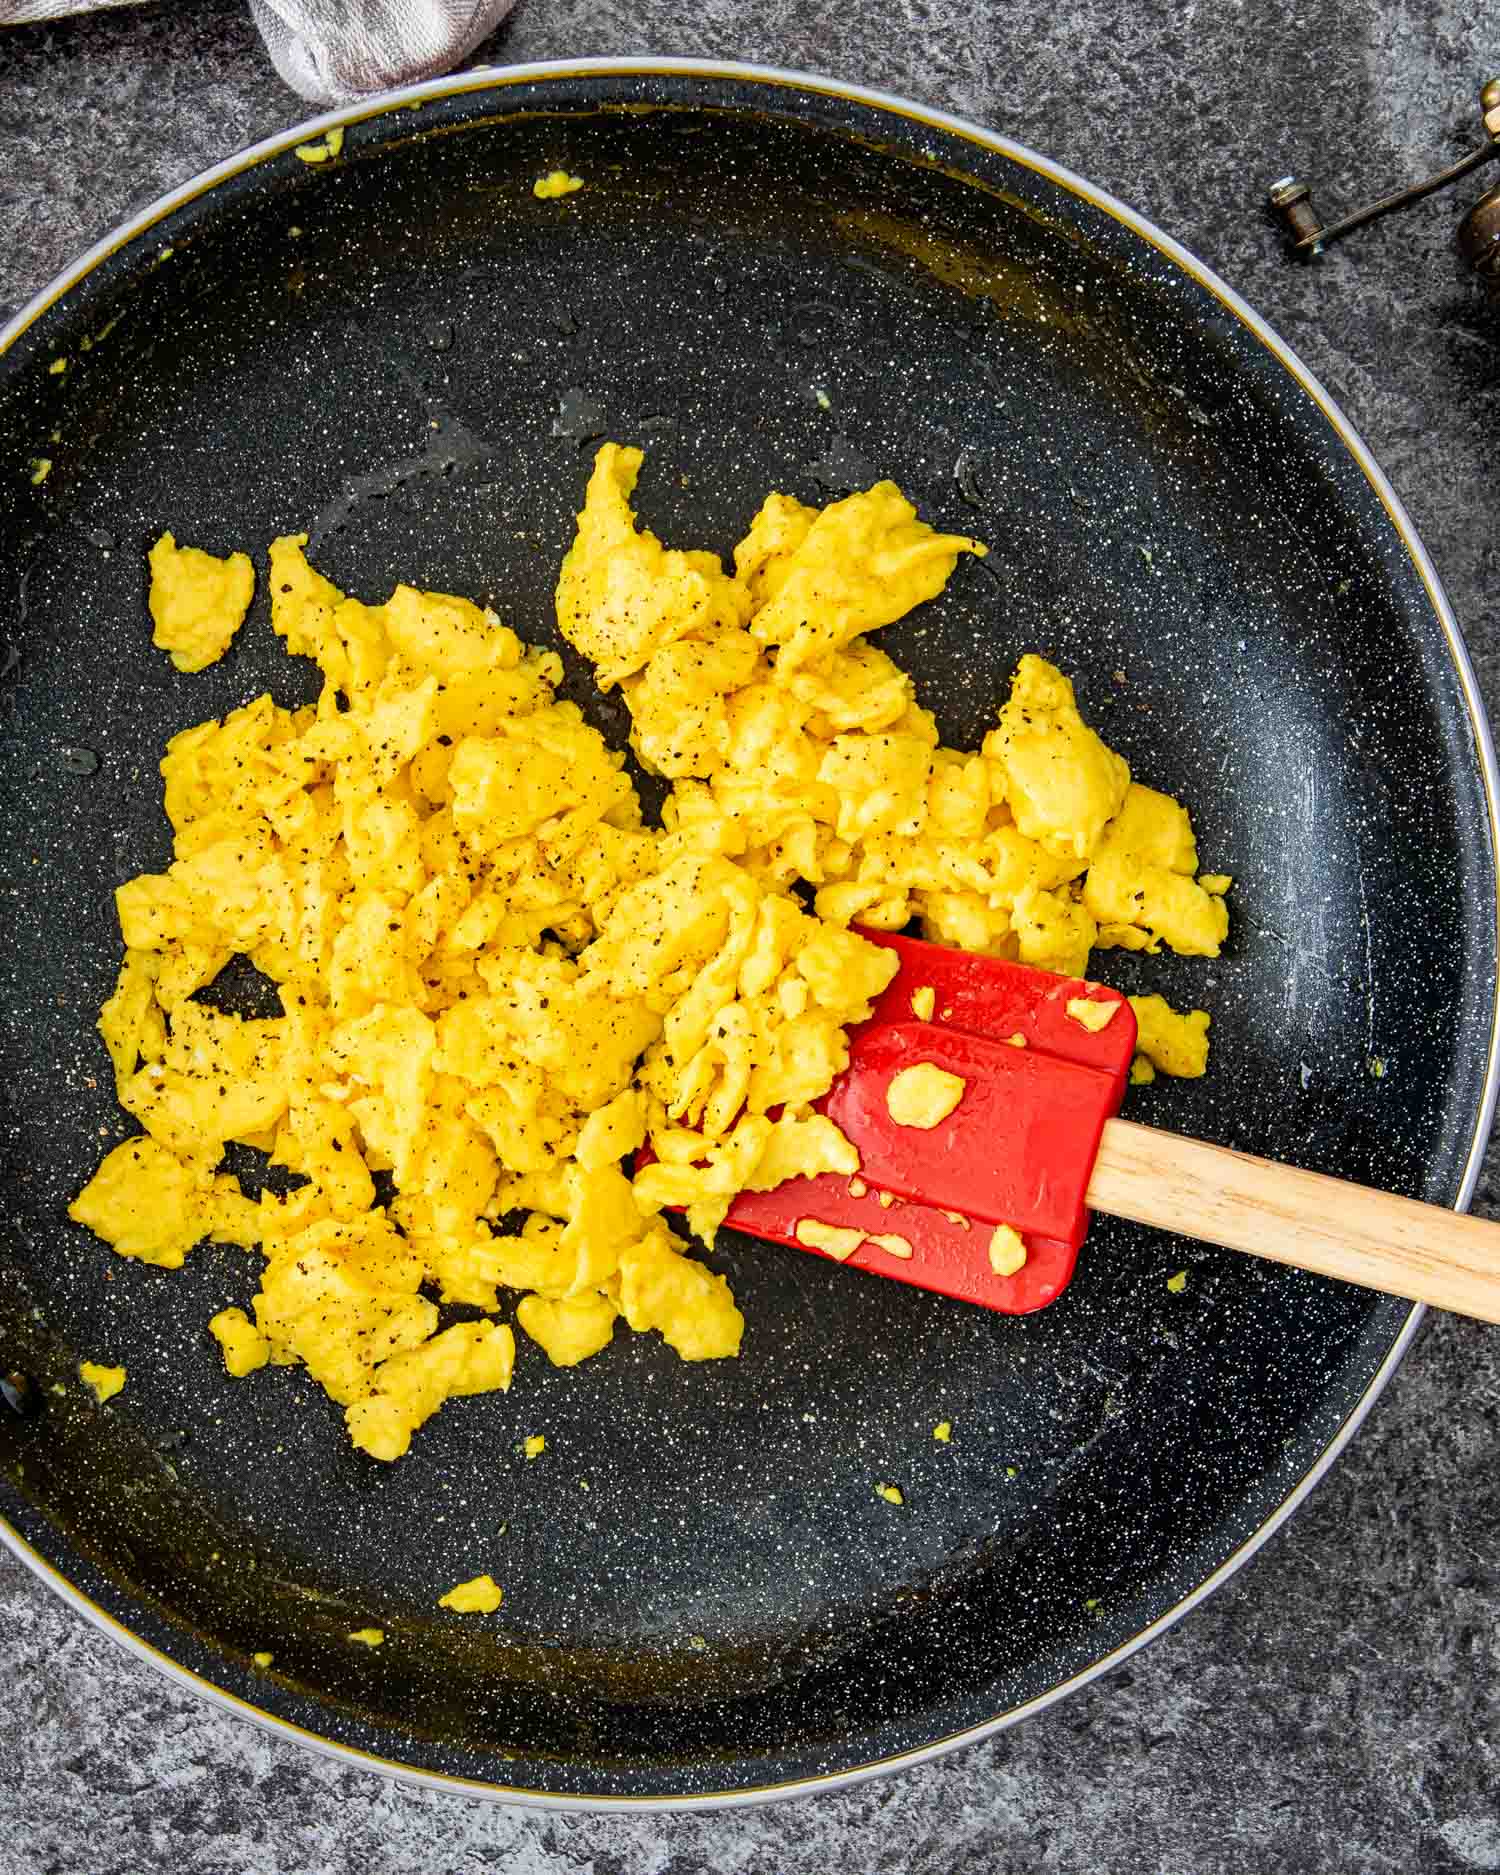 scrambled eggs freshly made in a skillet.